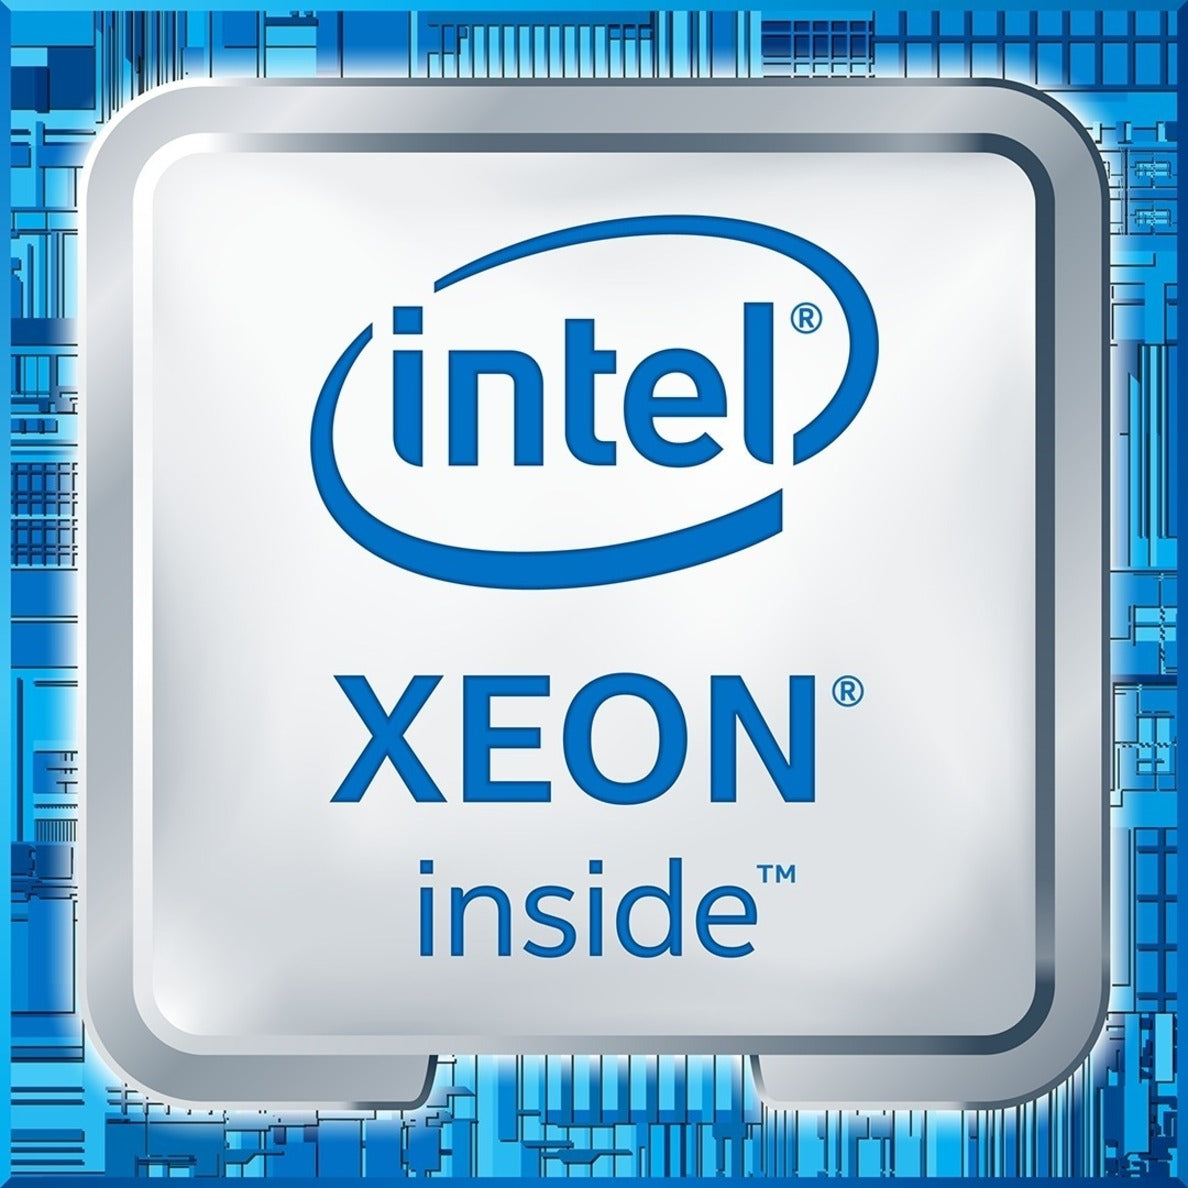 Intel CM8066002032901 Xeon E5-2609 v4 Octa-core 1.7GHz Server Processor, 20MB Cache, 85W TDP